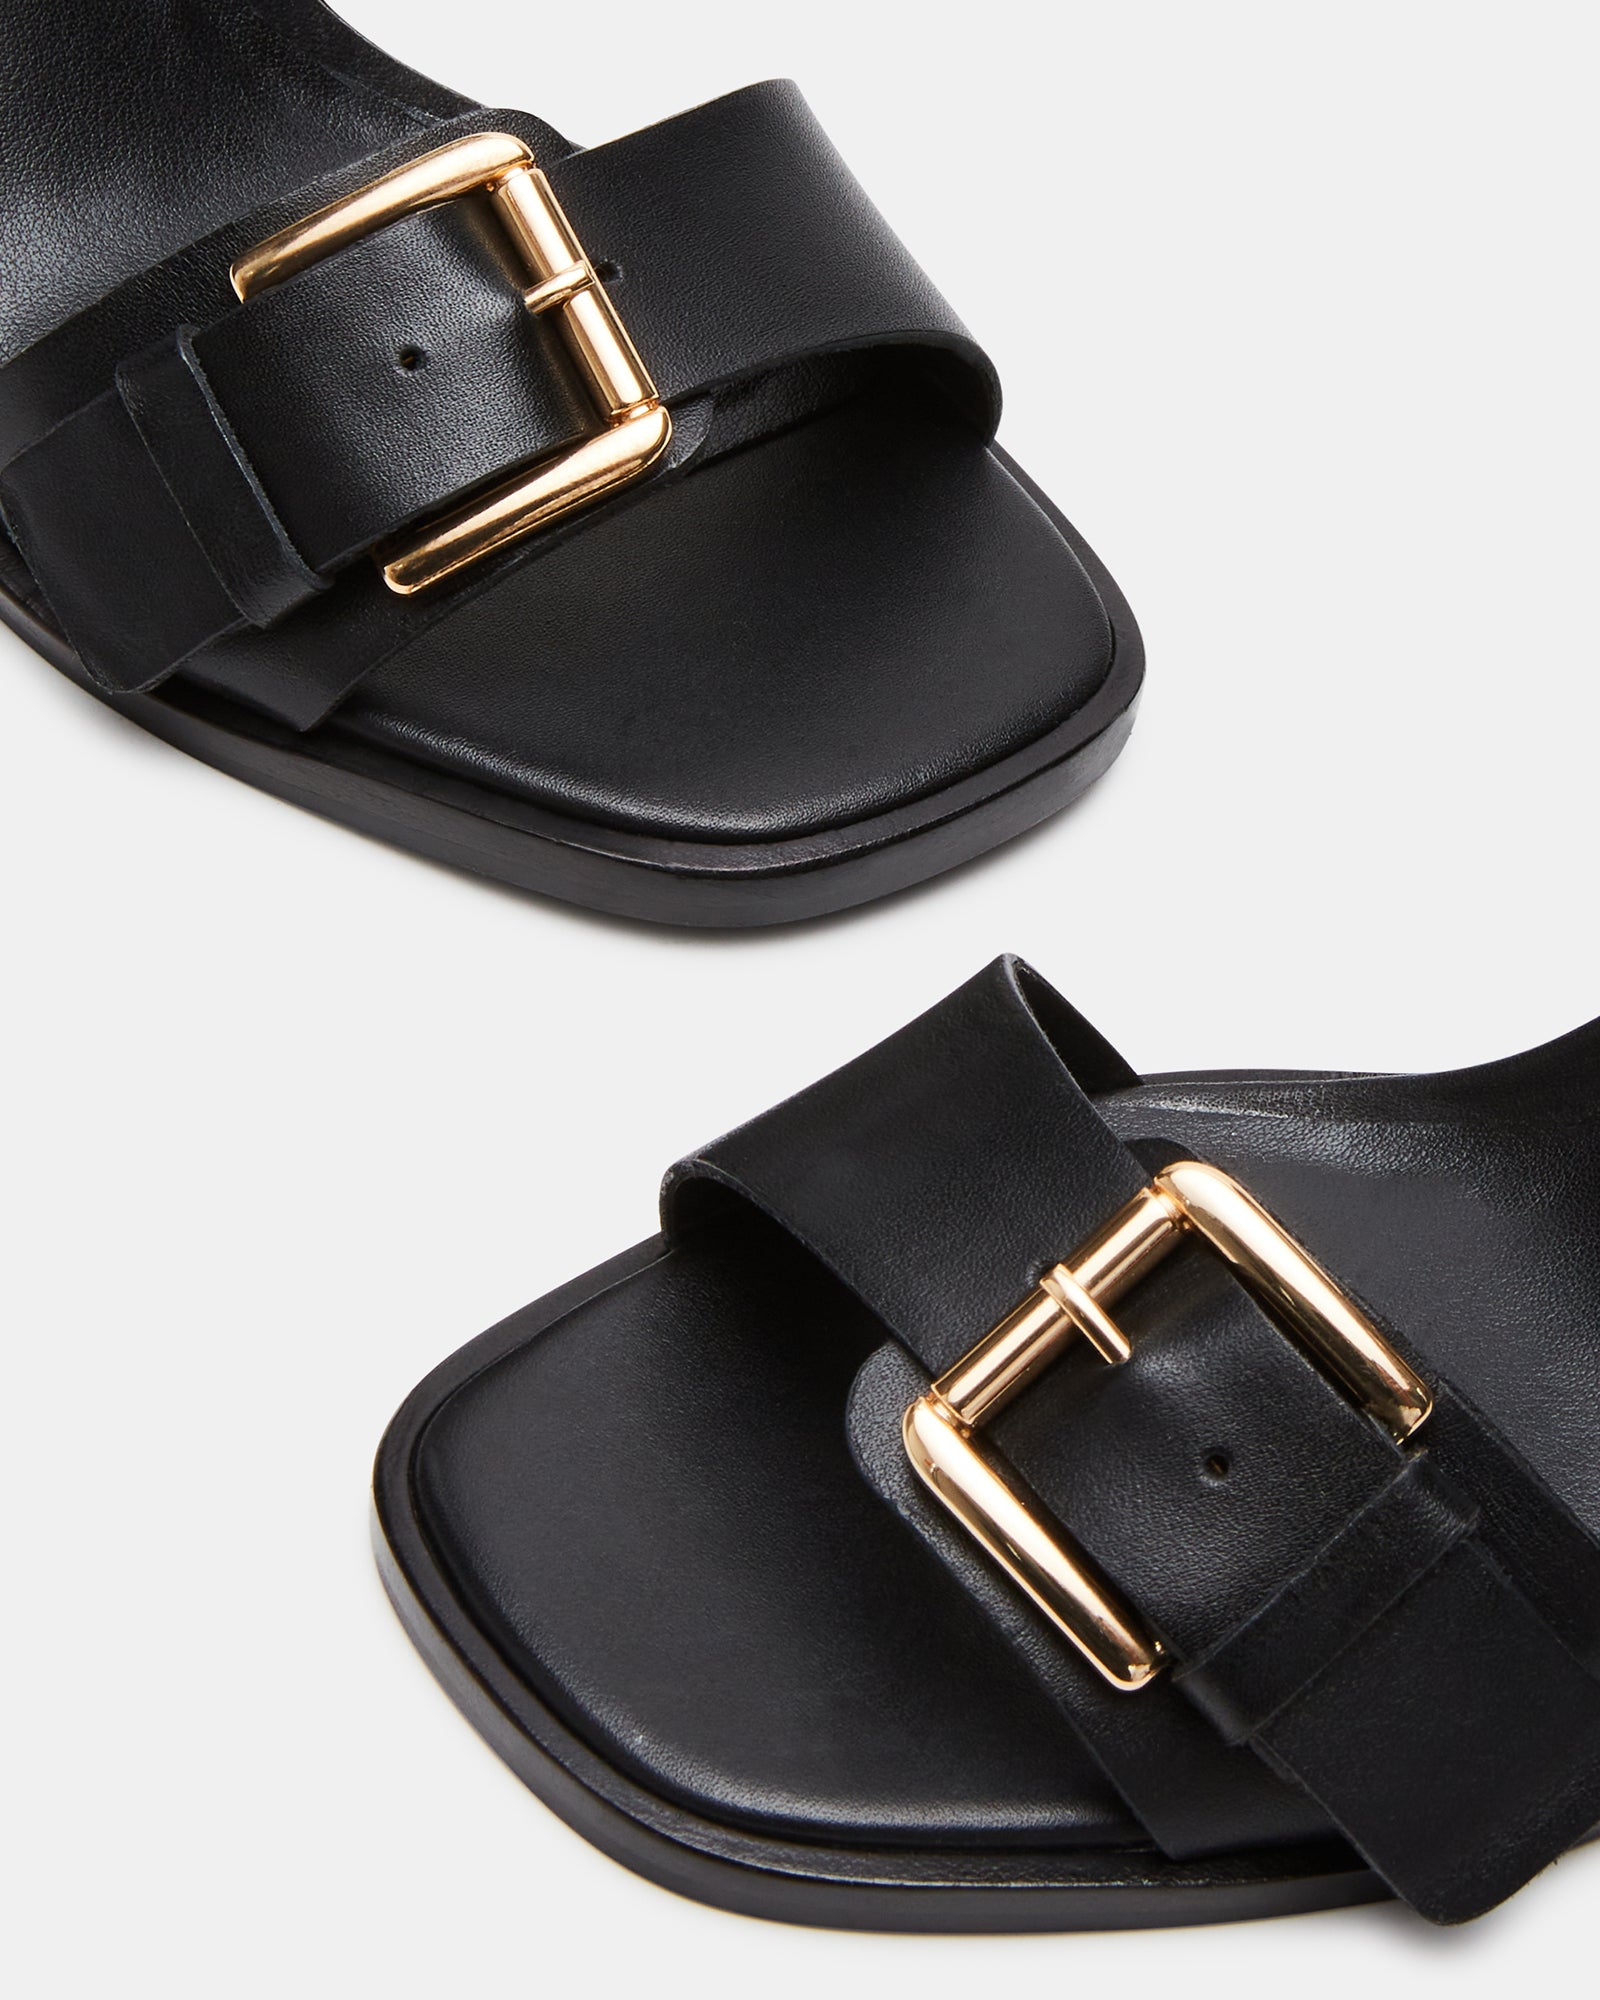 TRESSA Black Leather Block Heel | Women's Heeled Sandals – Steve Madden